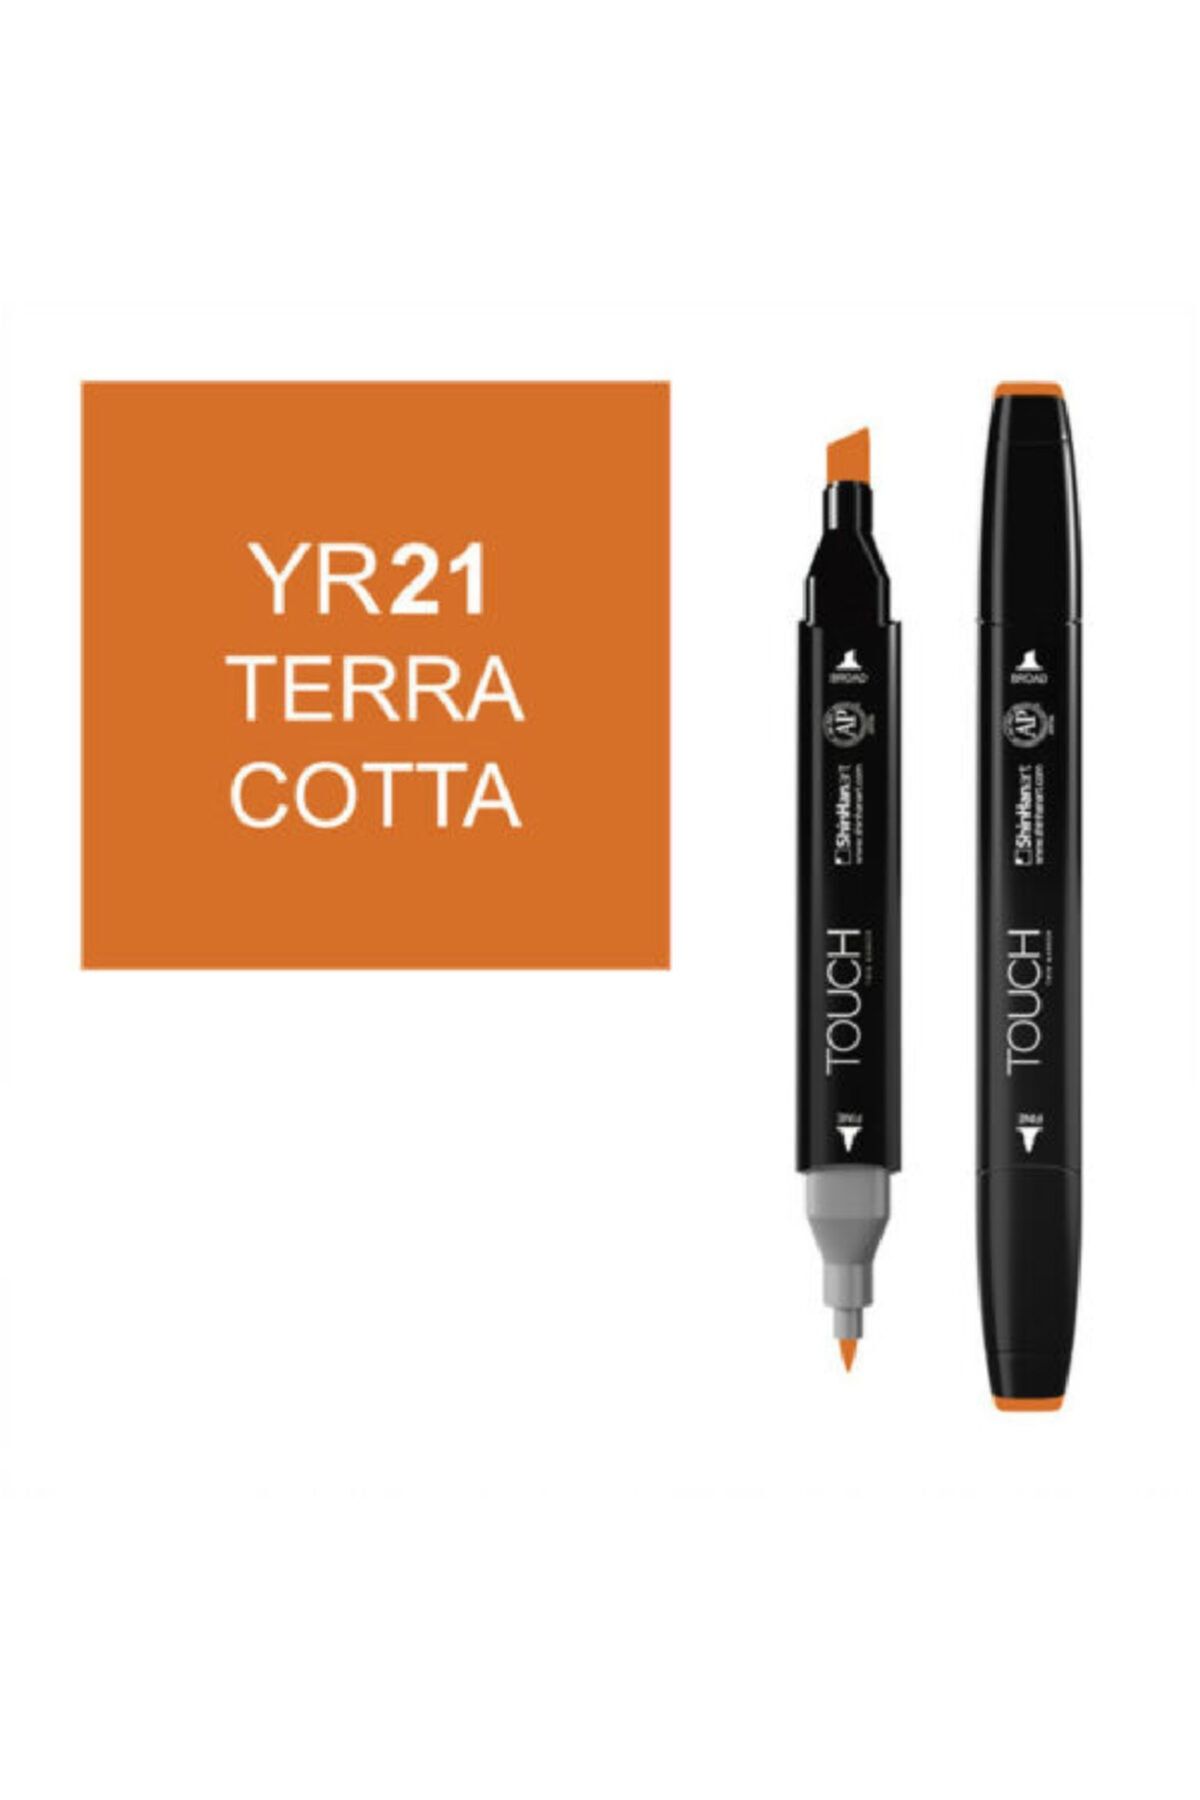 Ponart Touch Twin Yr21 Terra Cotta Marker Sh1110021